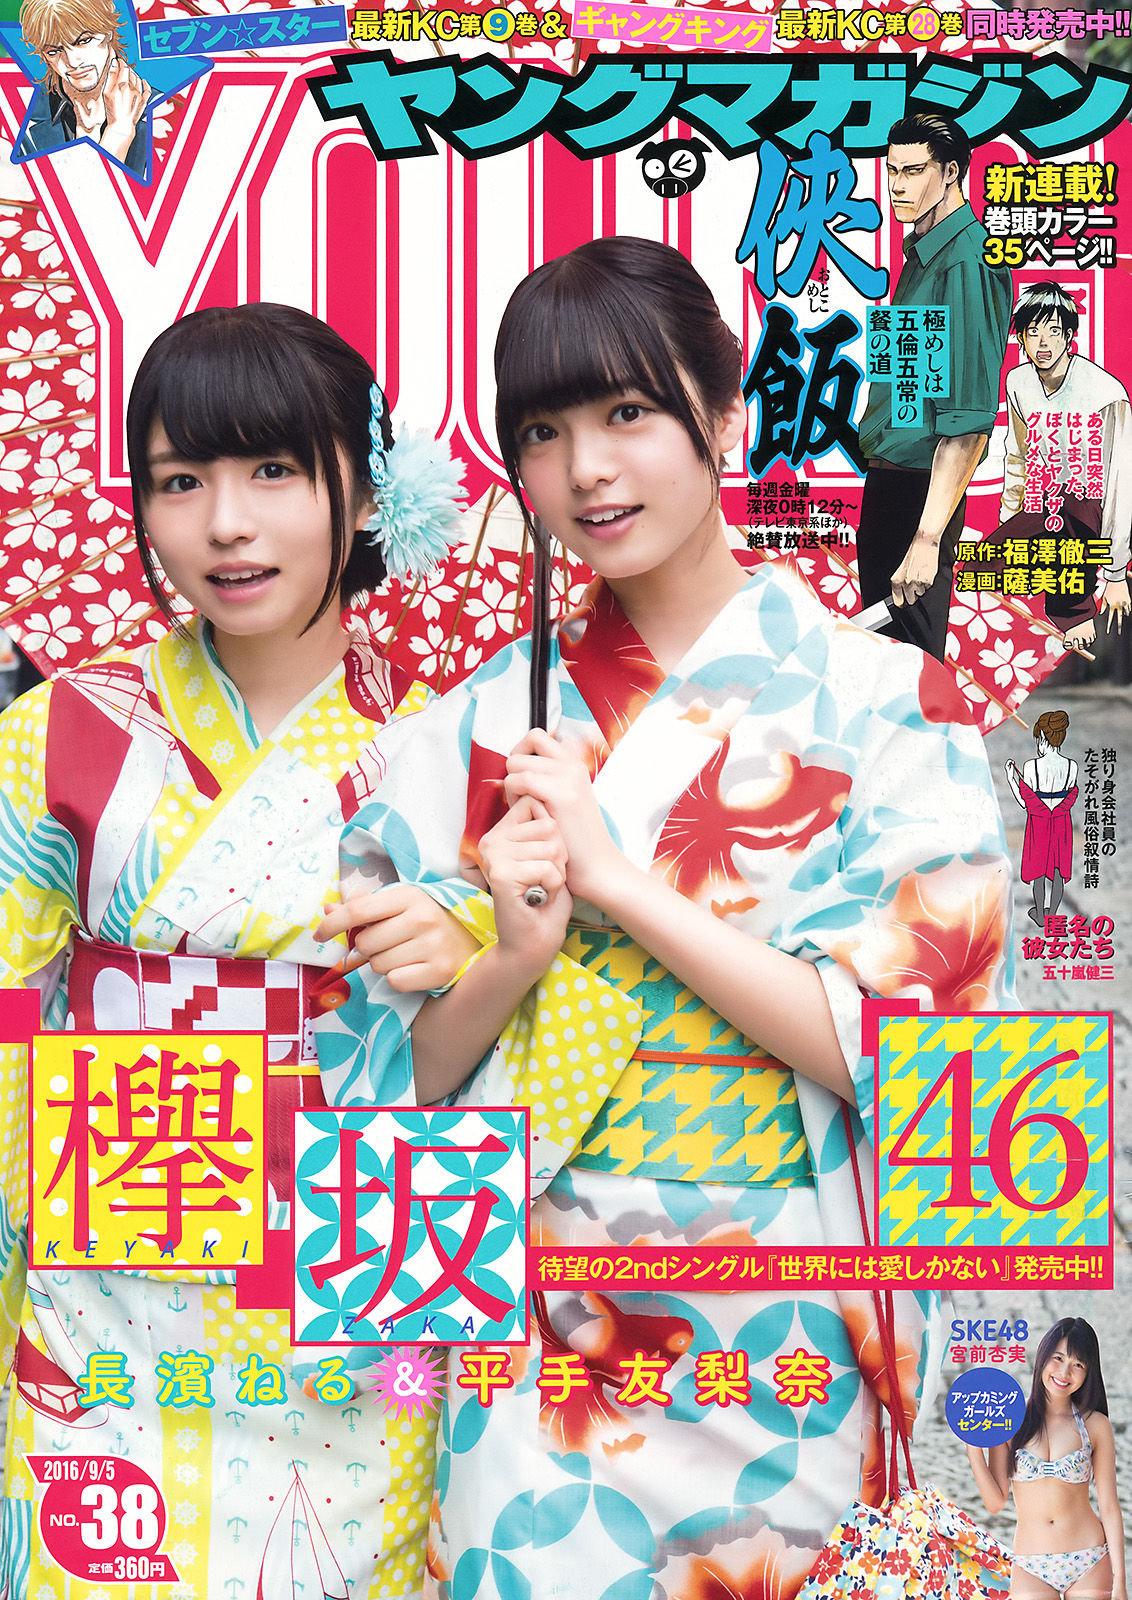 Young magazine. Nagahama Megumi.